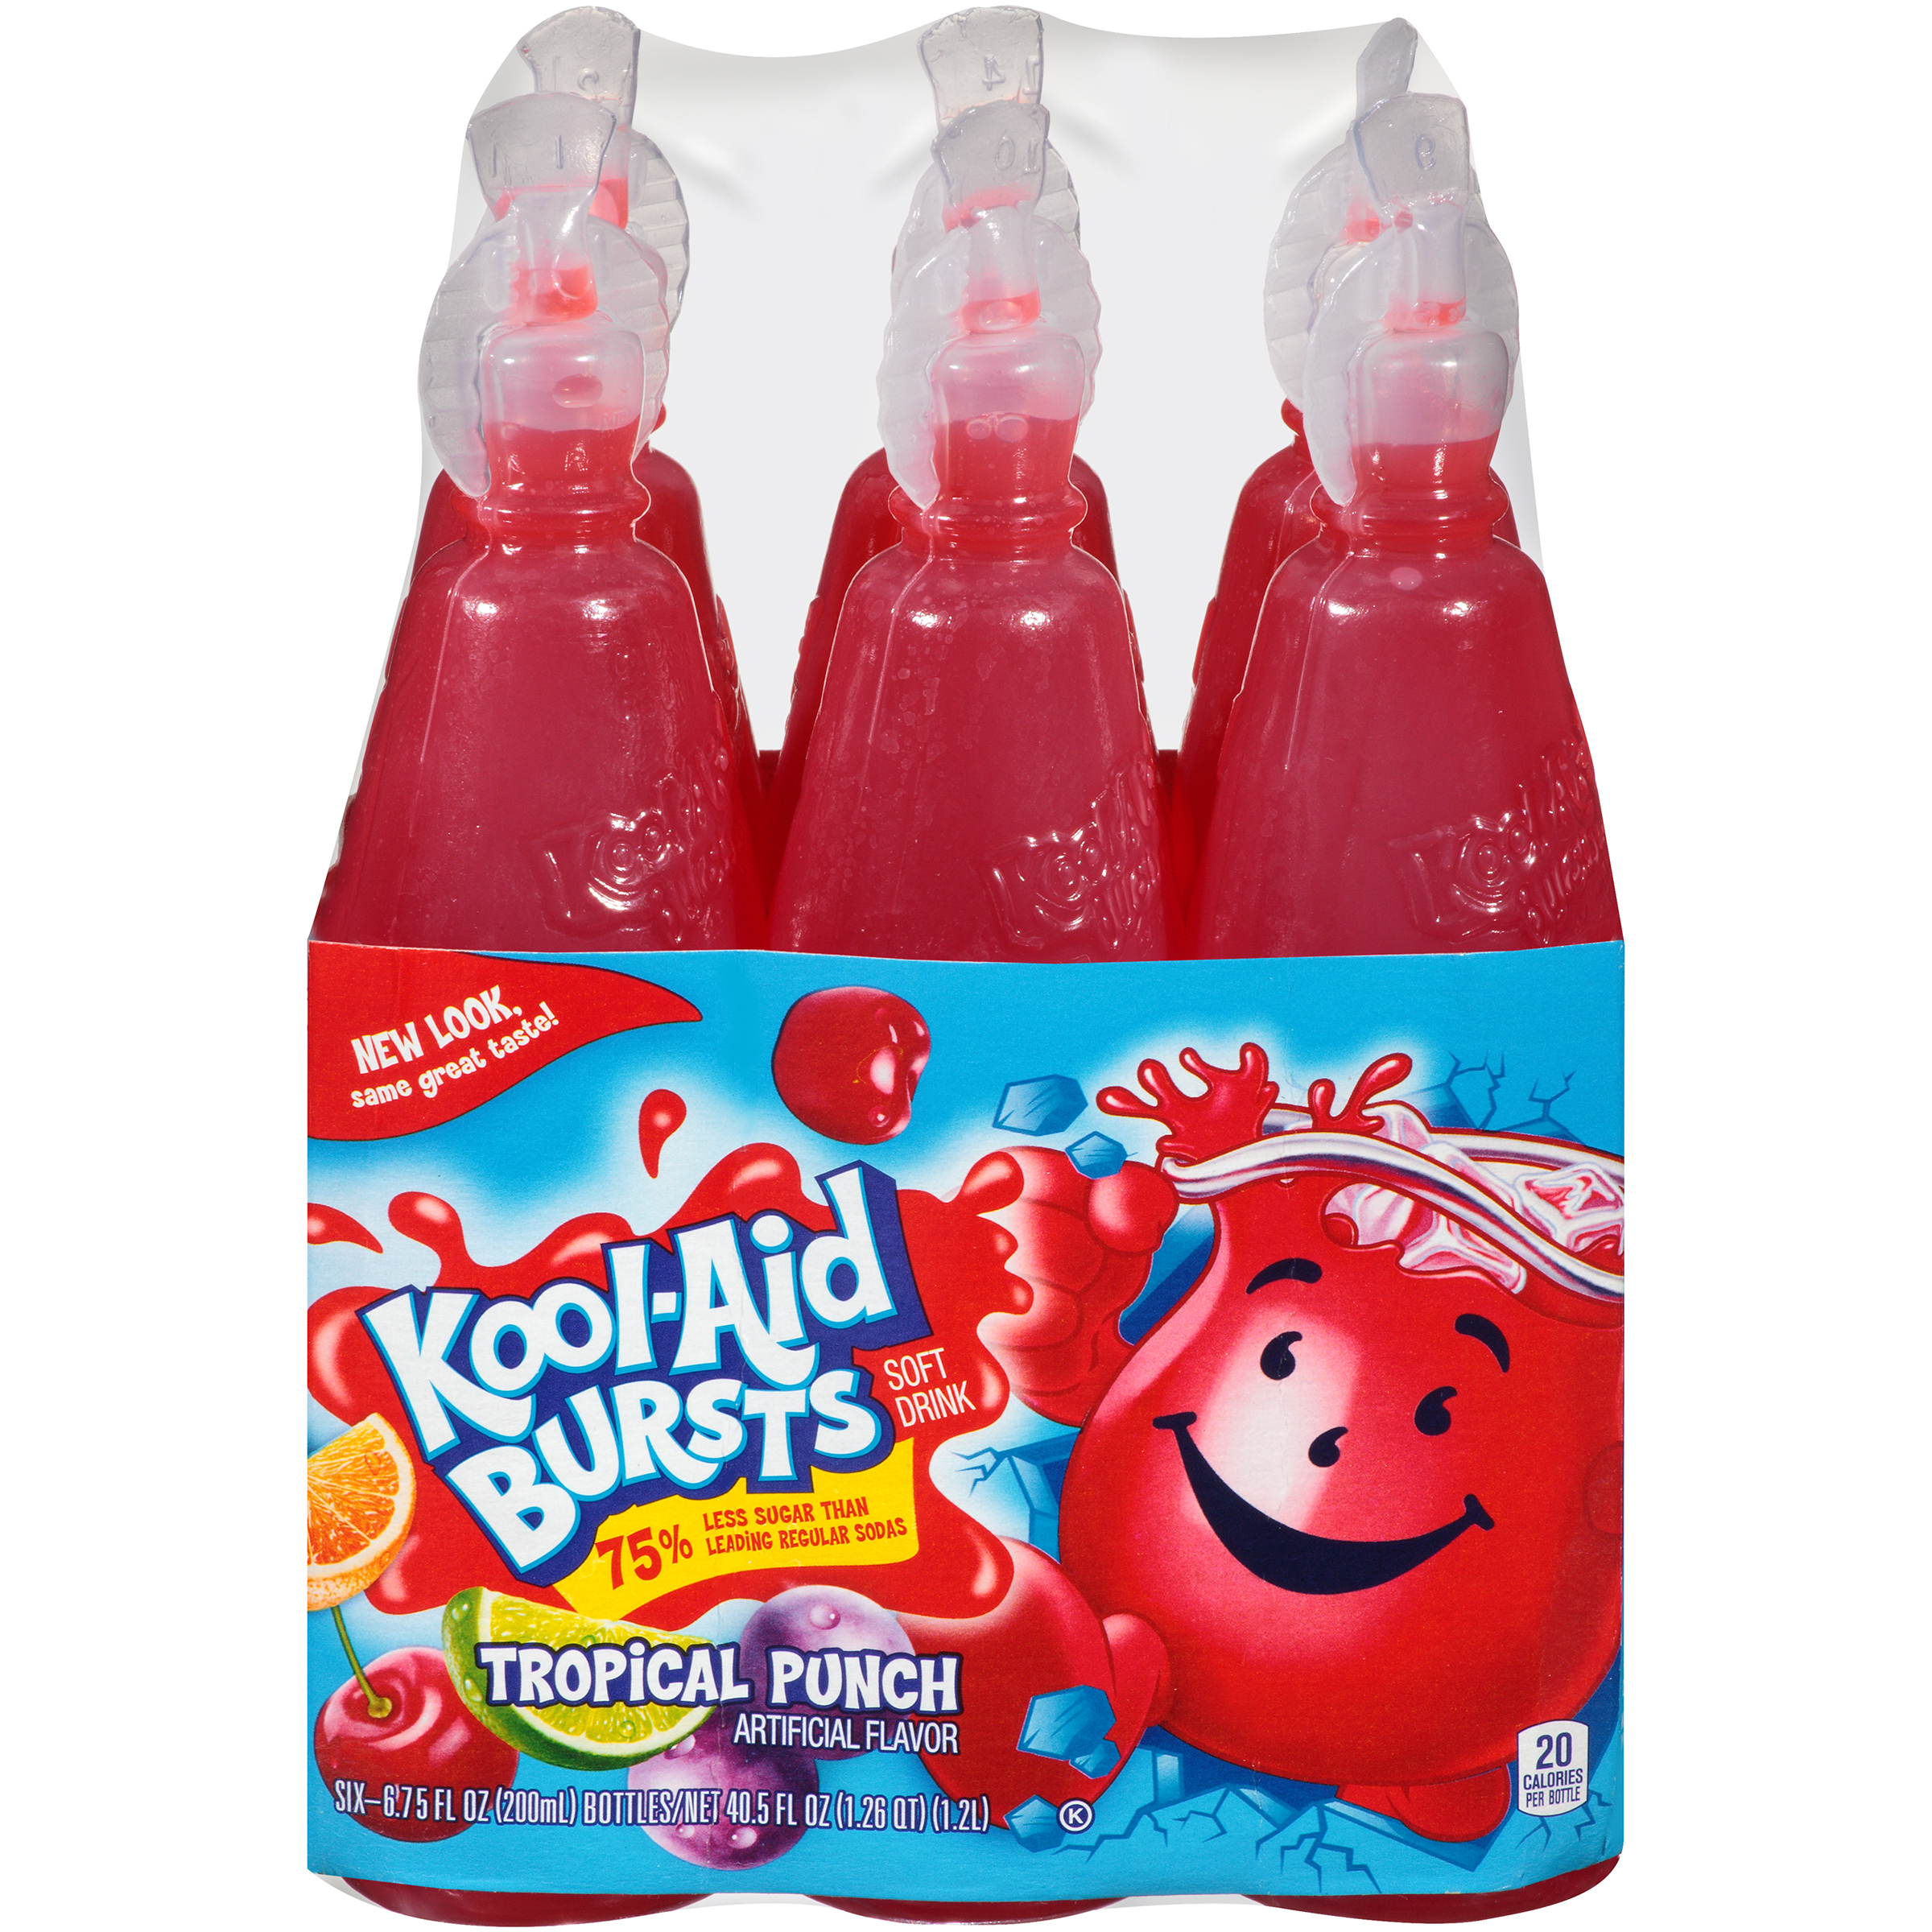 KoolAid Bursts Soft Drink, Tropical Punch, 6 6.75 fl oz